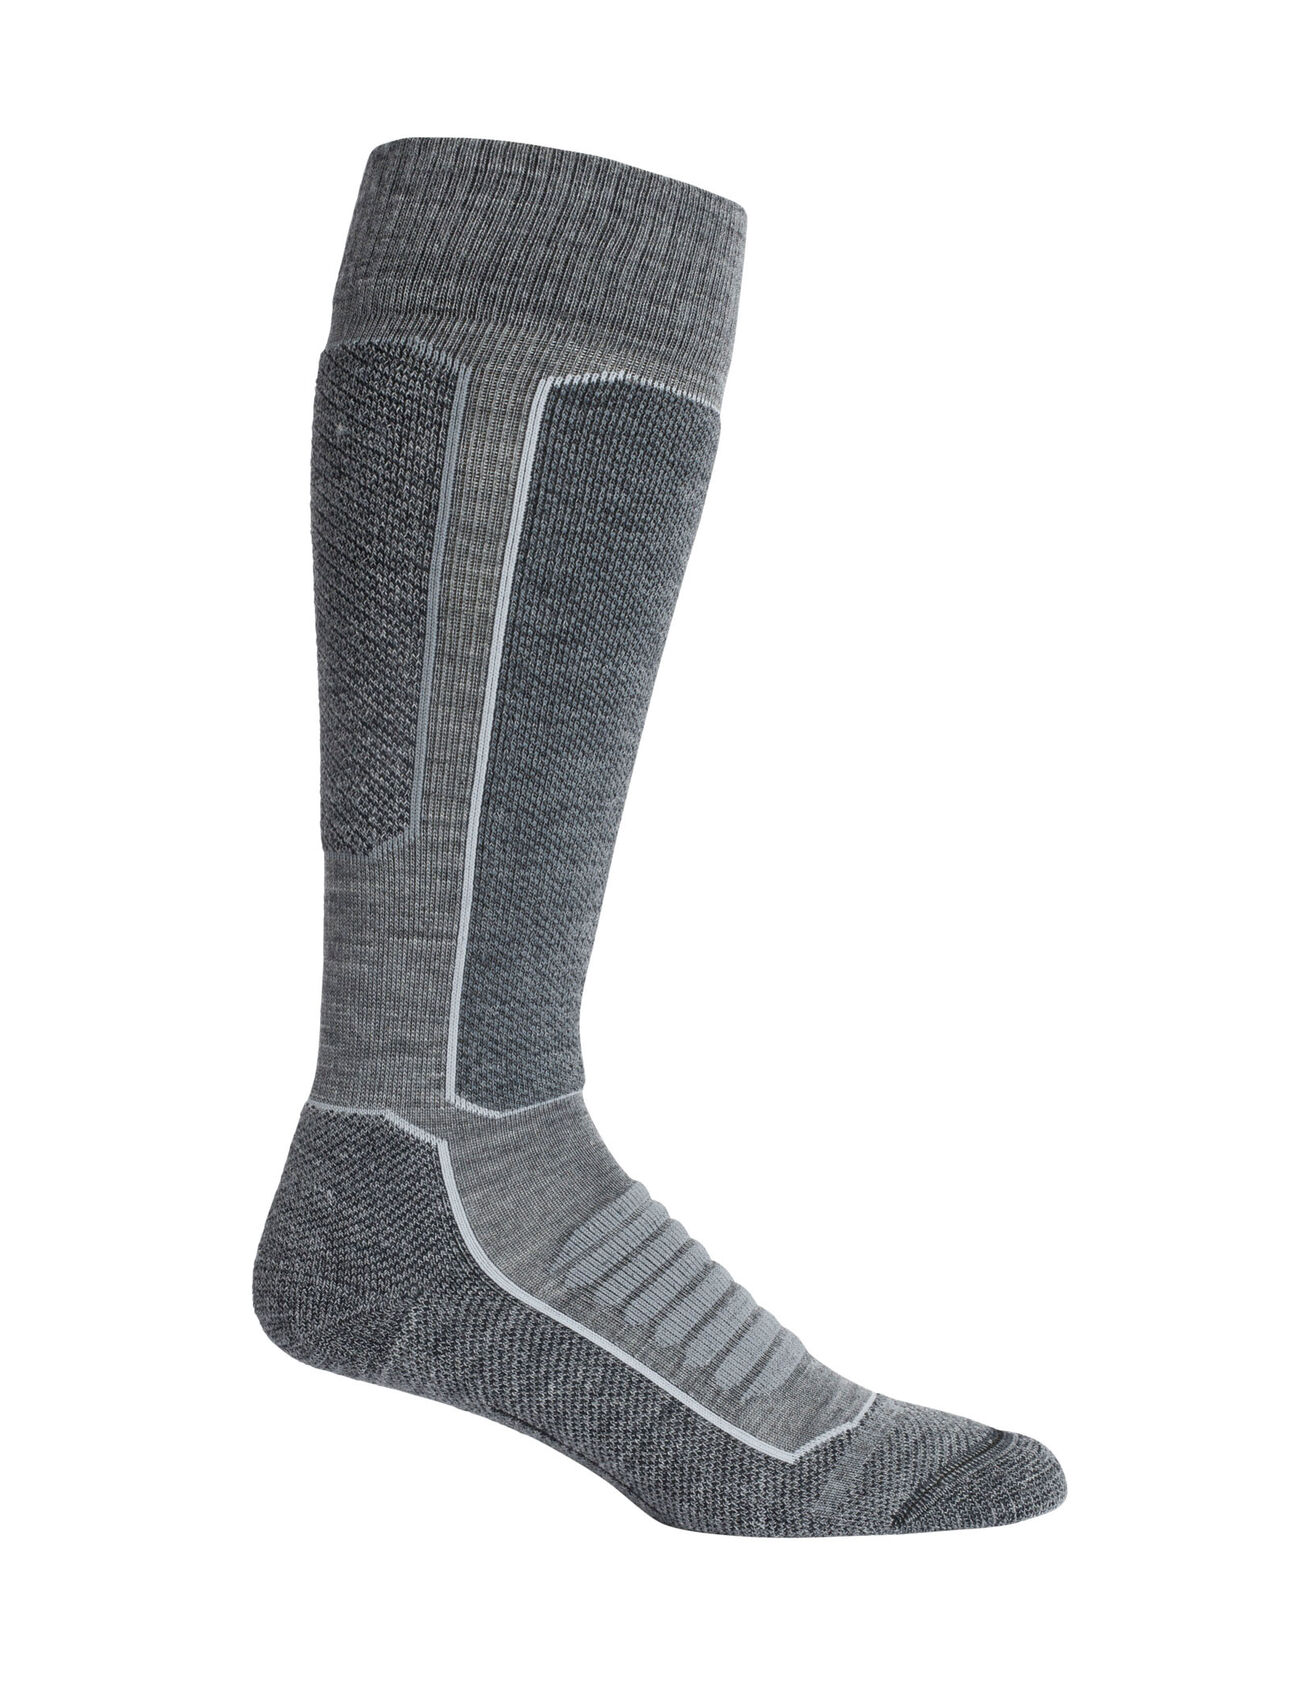 Merino Ski+ Medium Over the Calf Socks